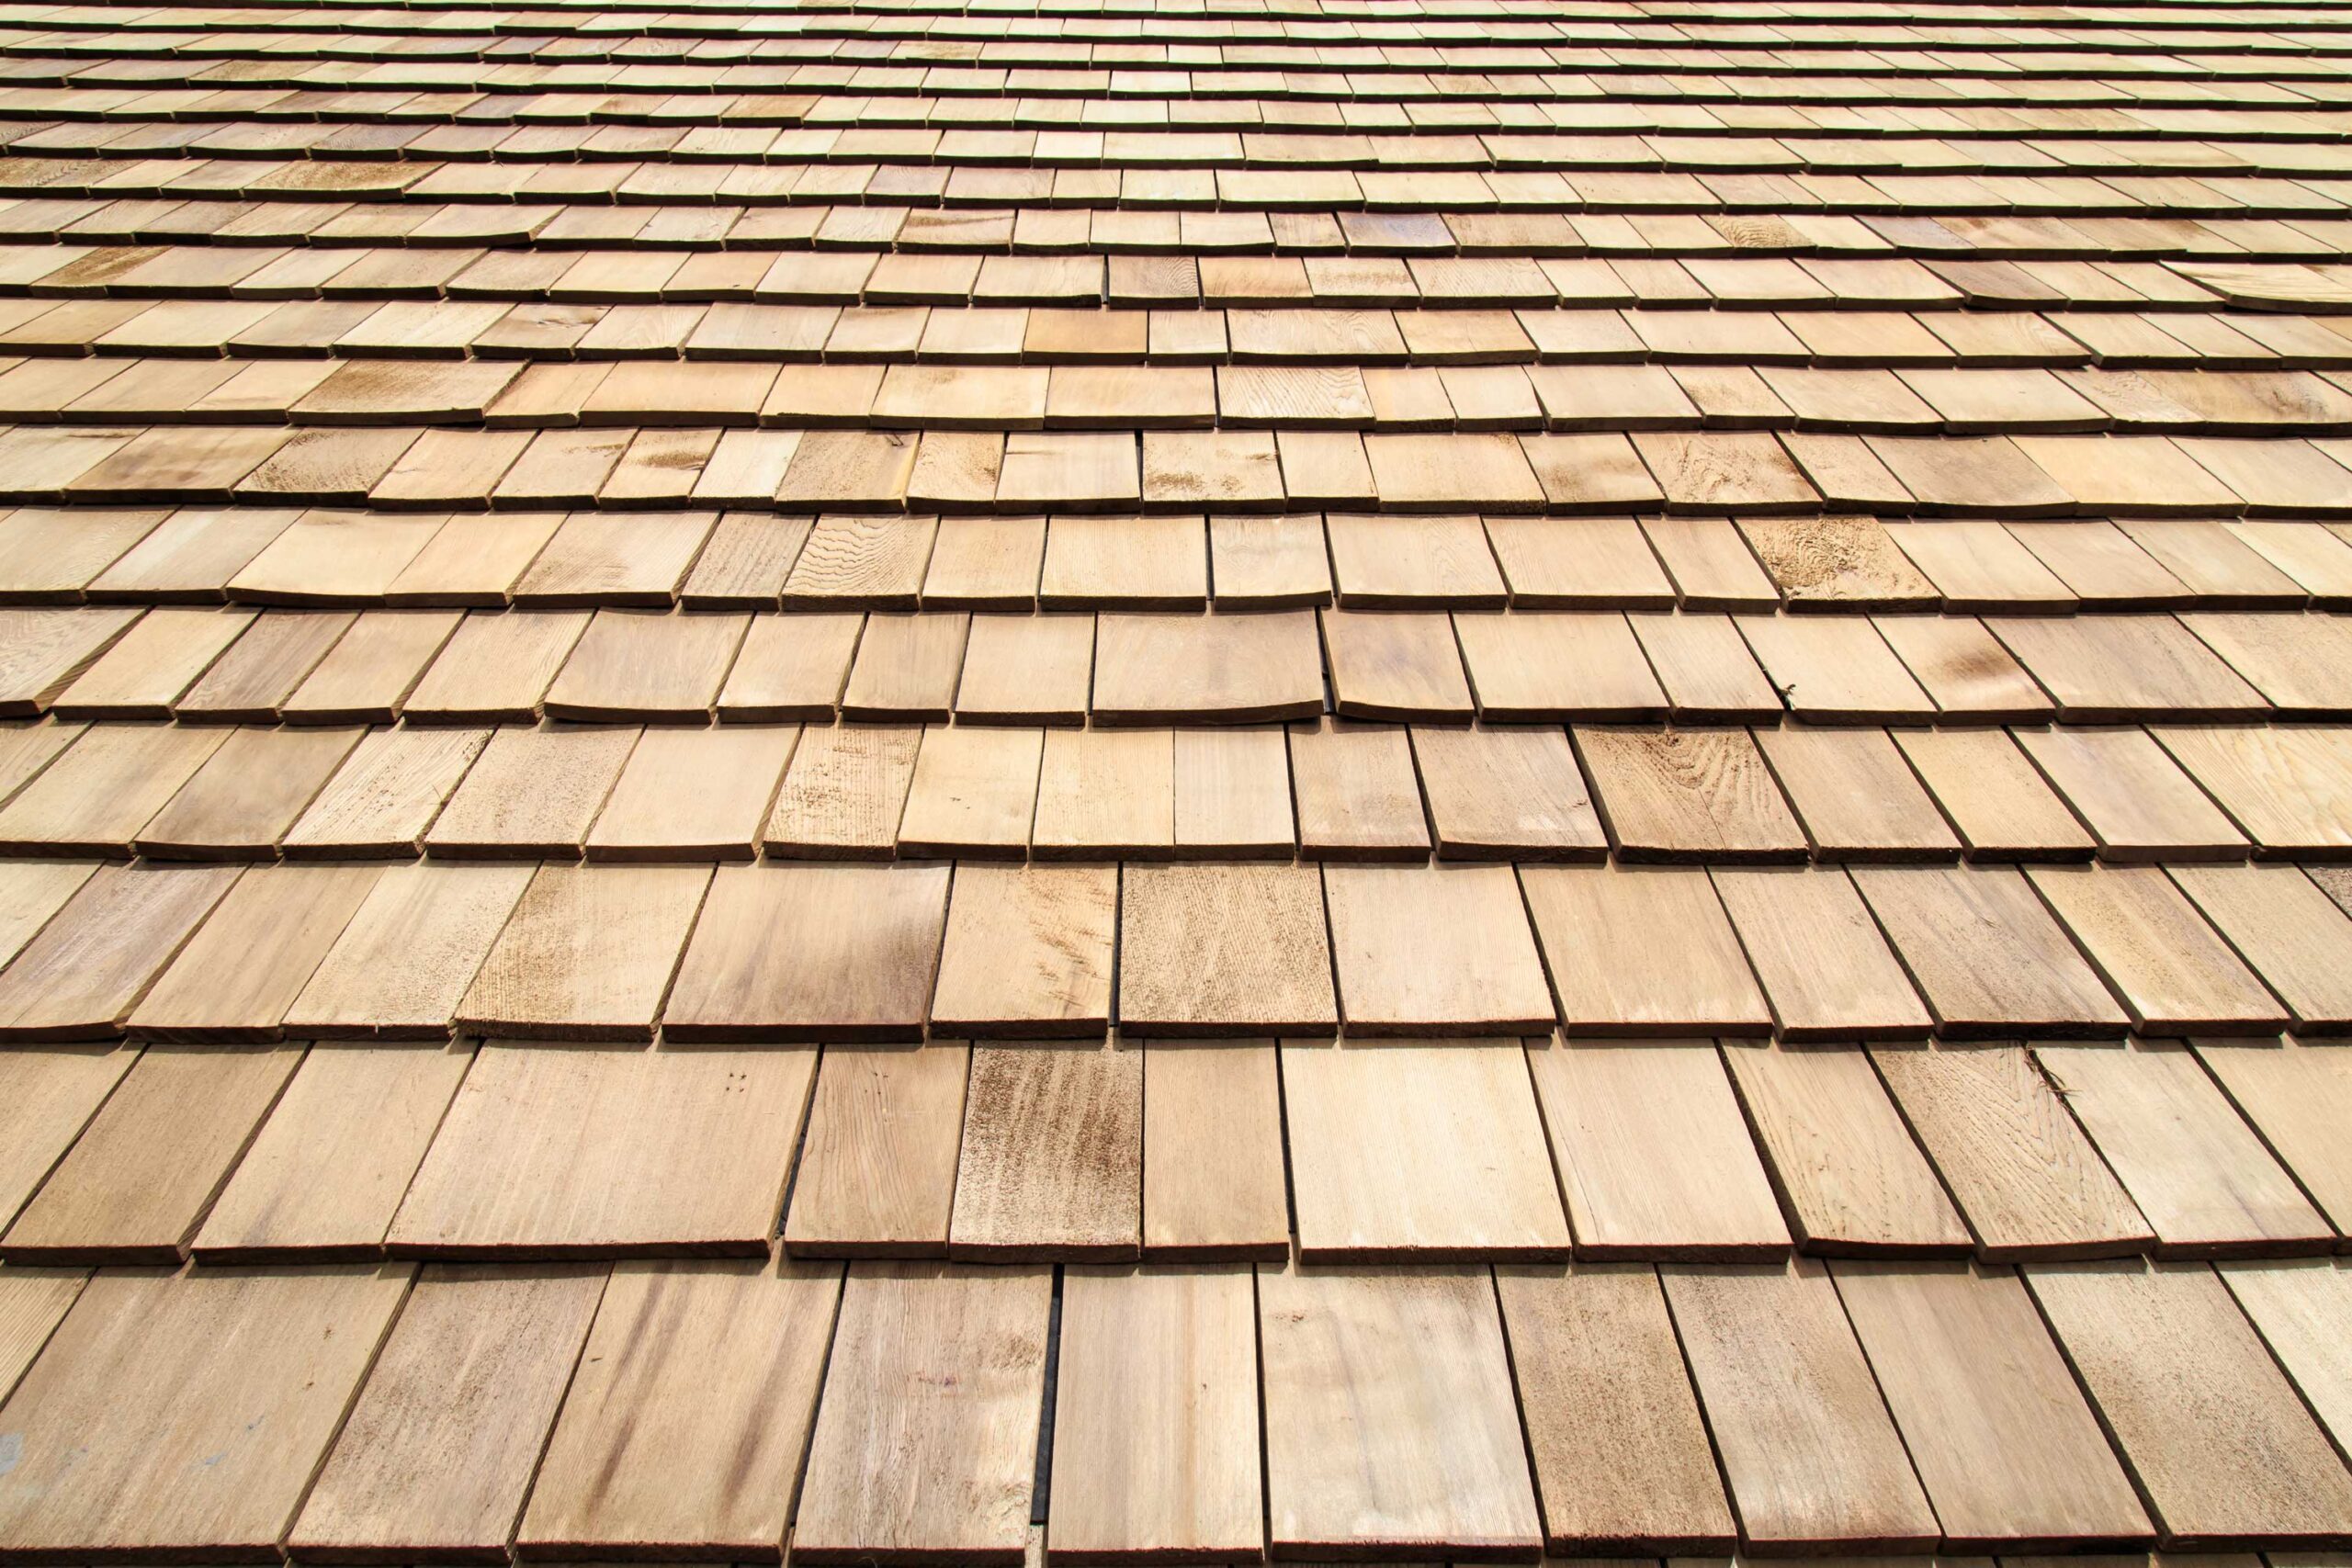 cedar roof benefits, cedar roof aesthetics, increase curb appeal